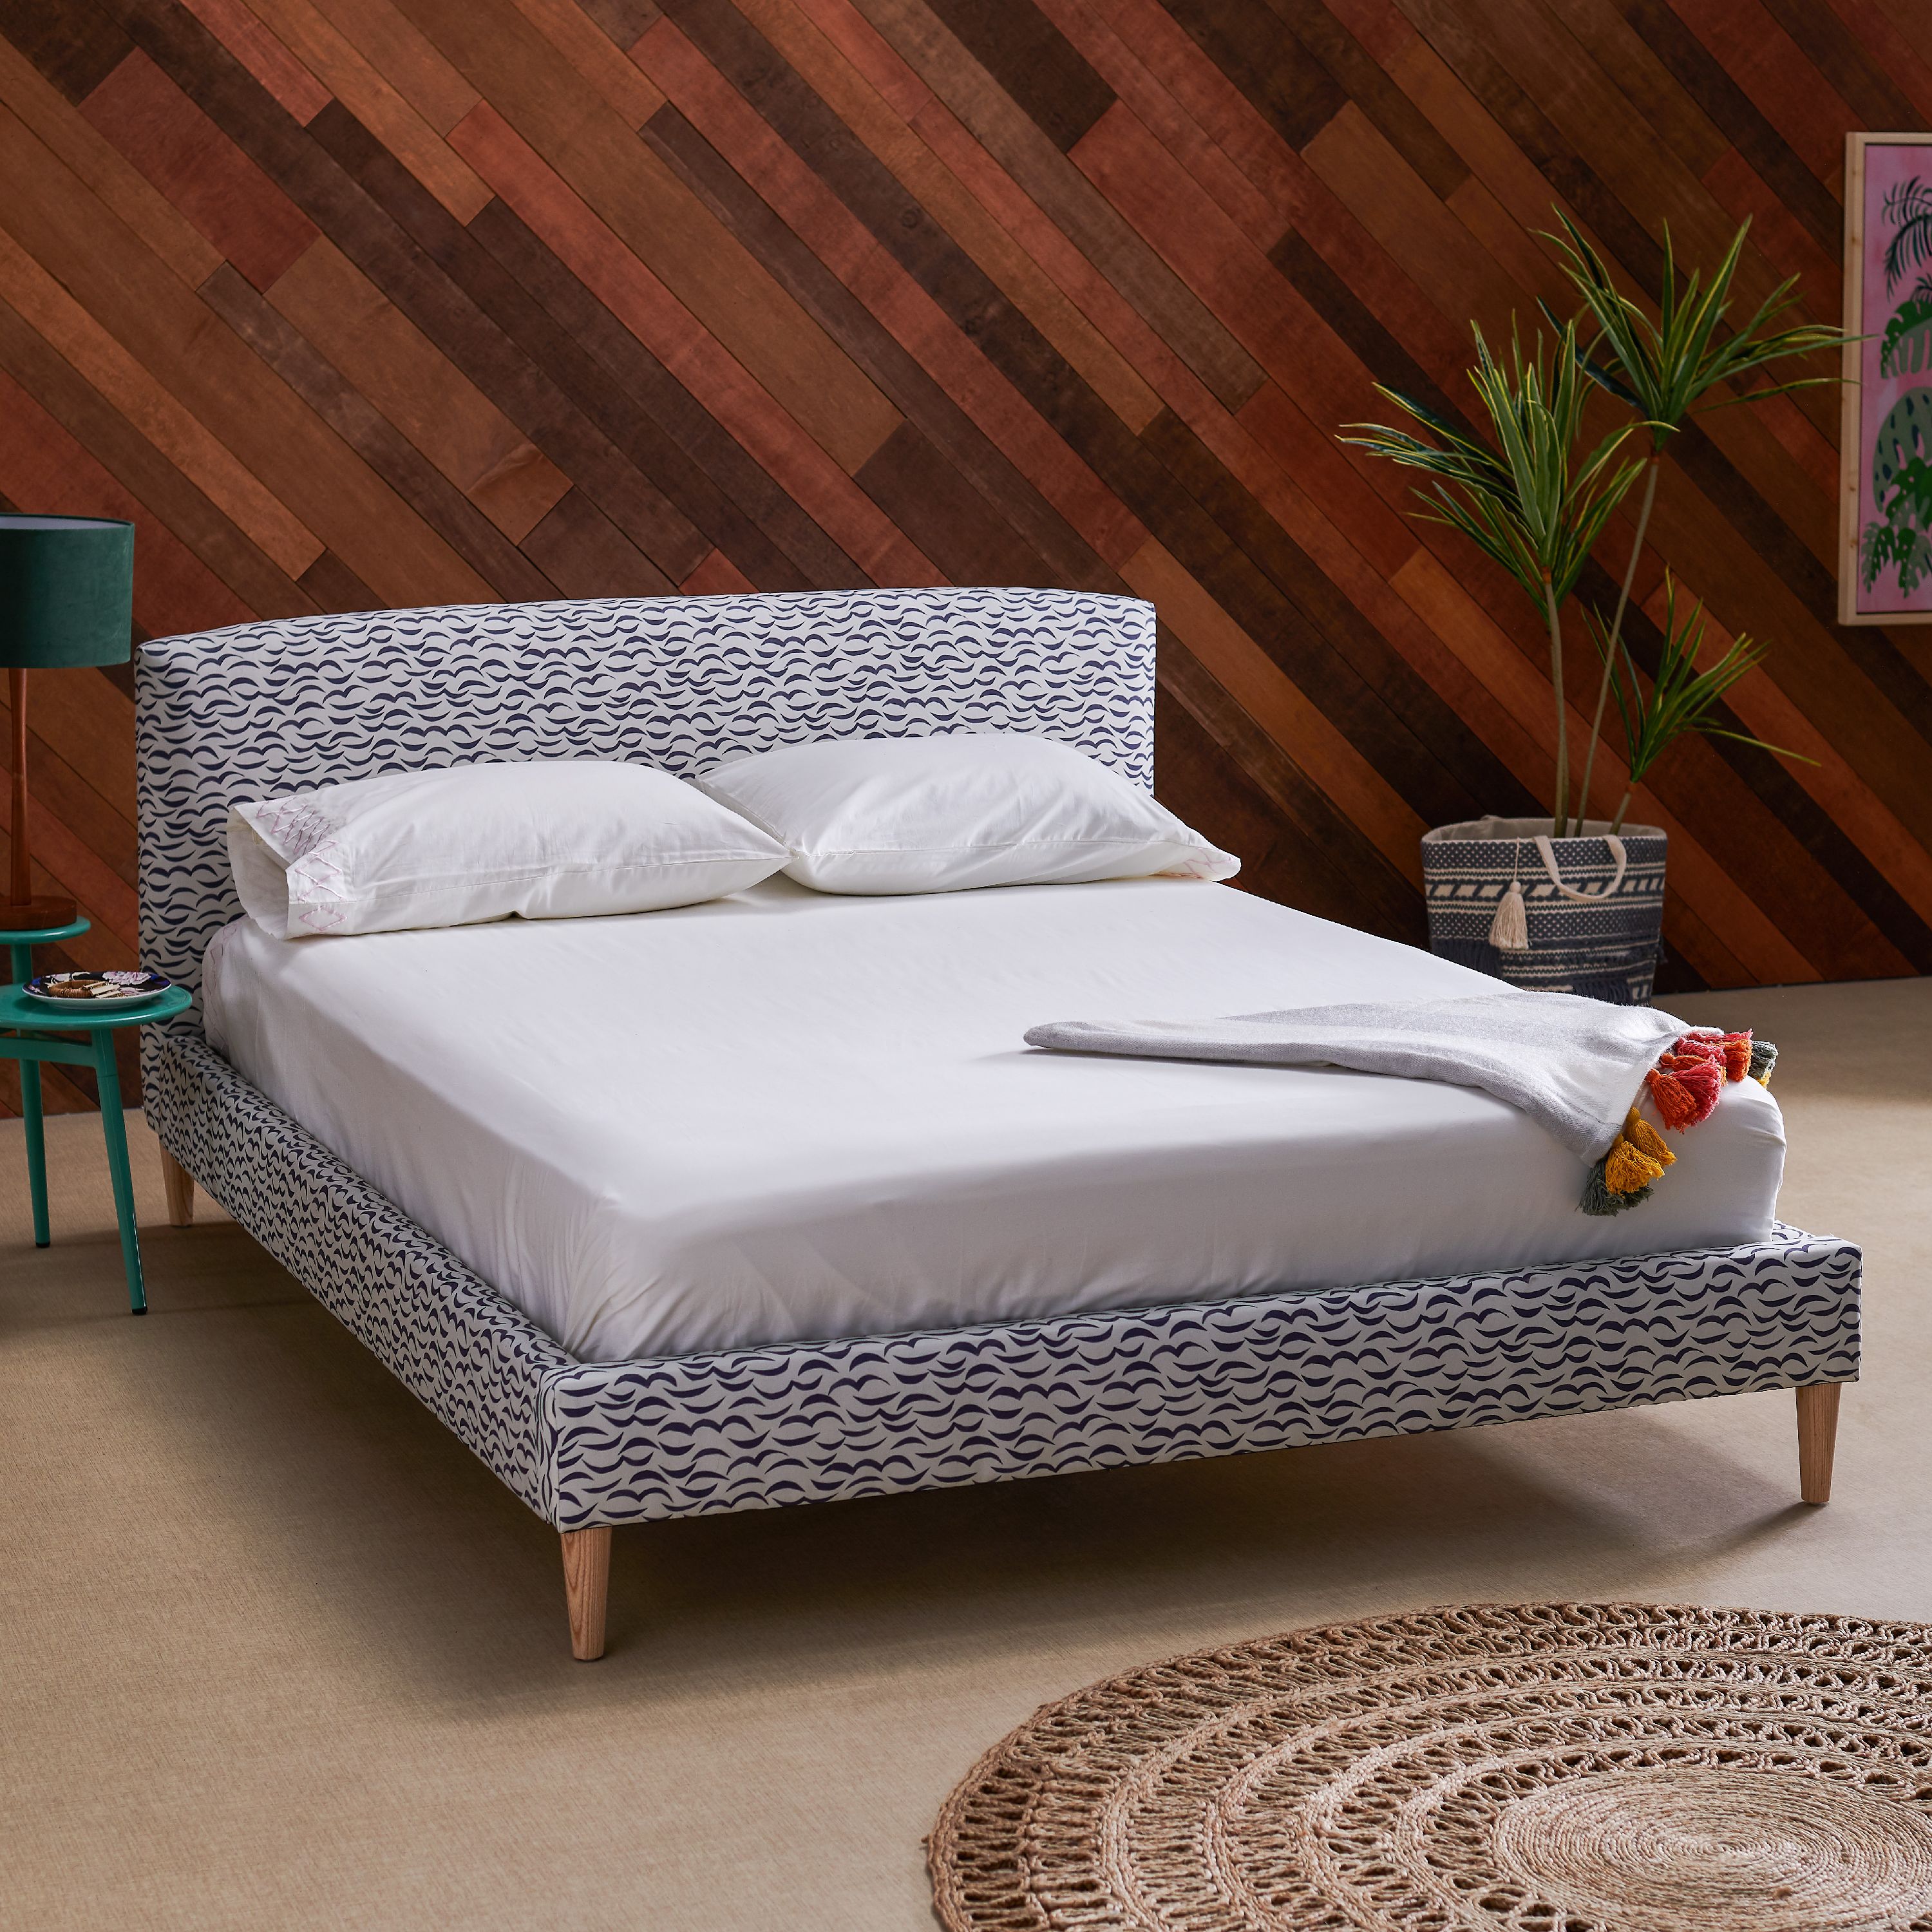 Crescent Moon Upholstered Platform Bed, Multiple Sizes by Drew Barrymore Flower Home - image 3 of 10